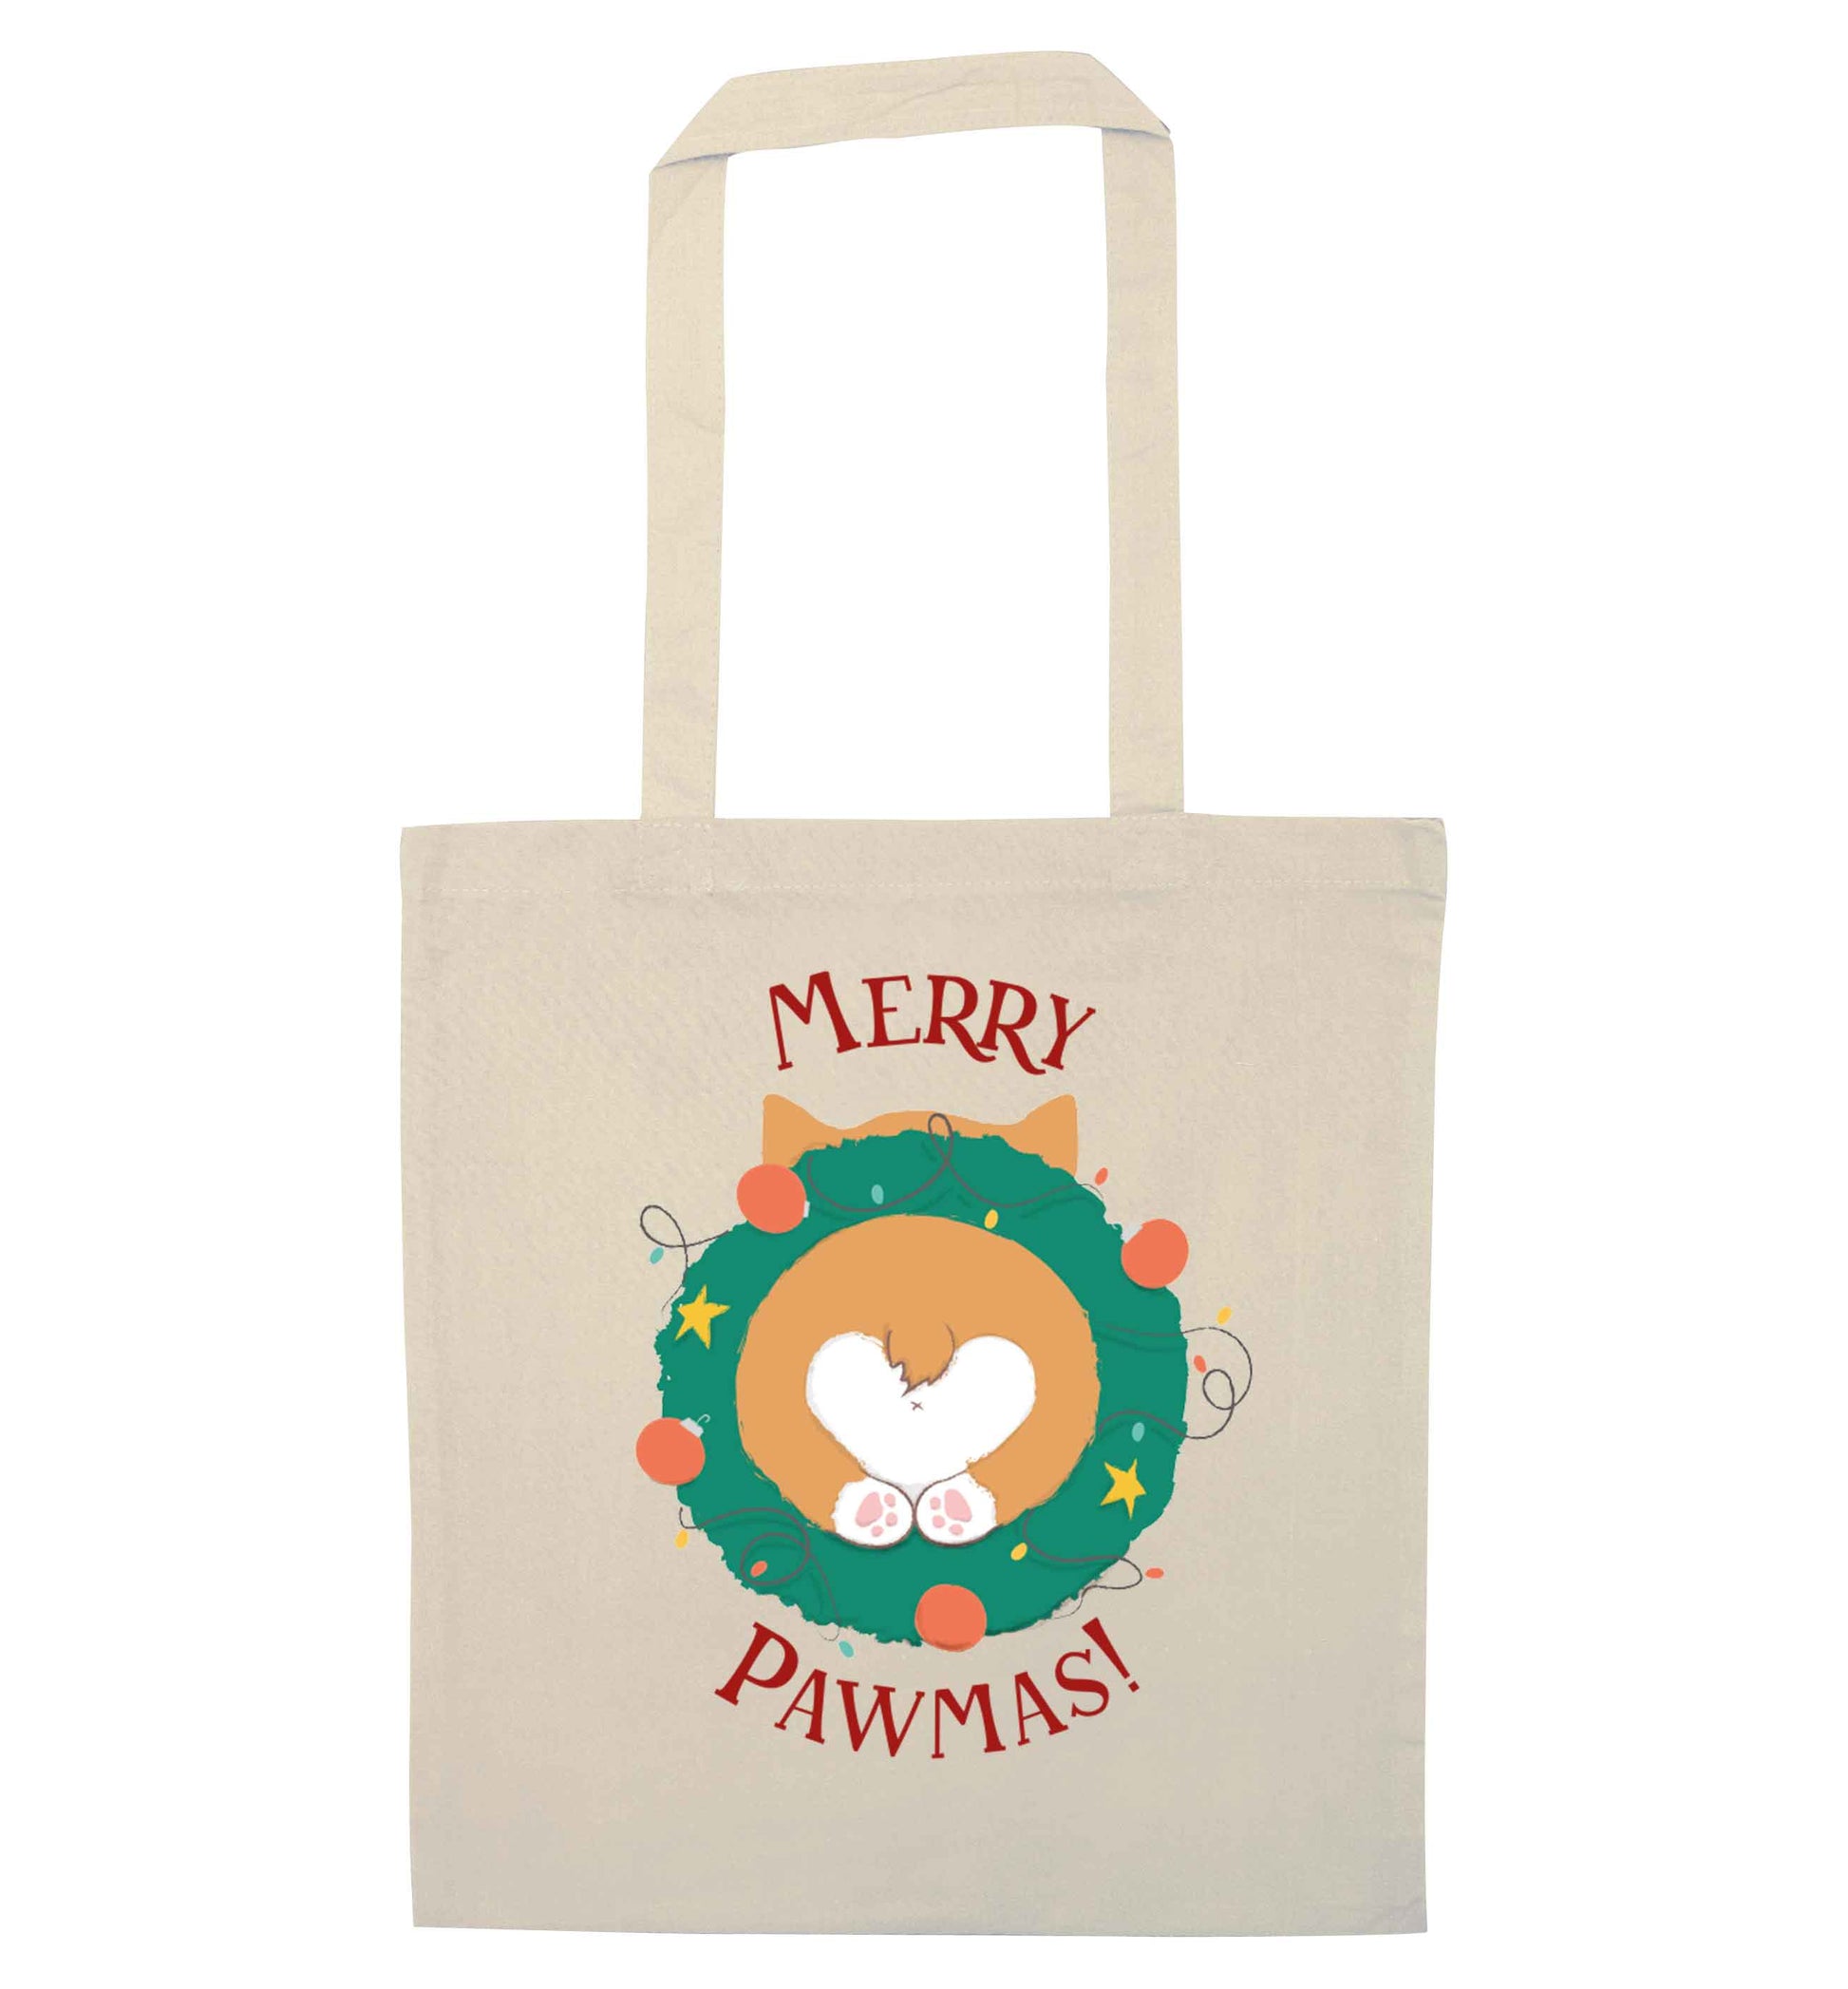 Merry Pawmas natural tote bag